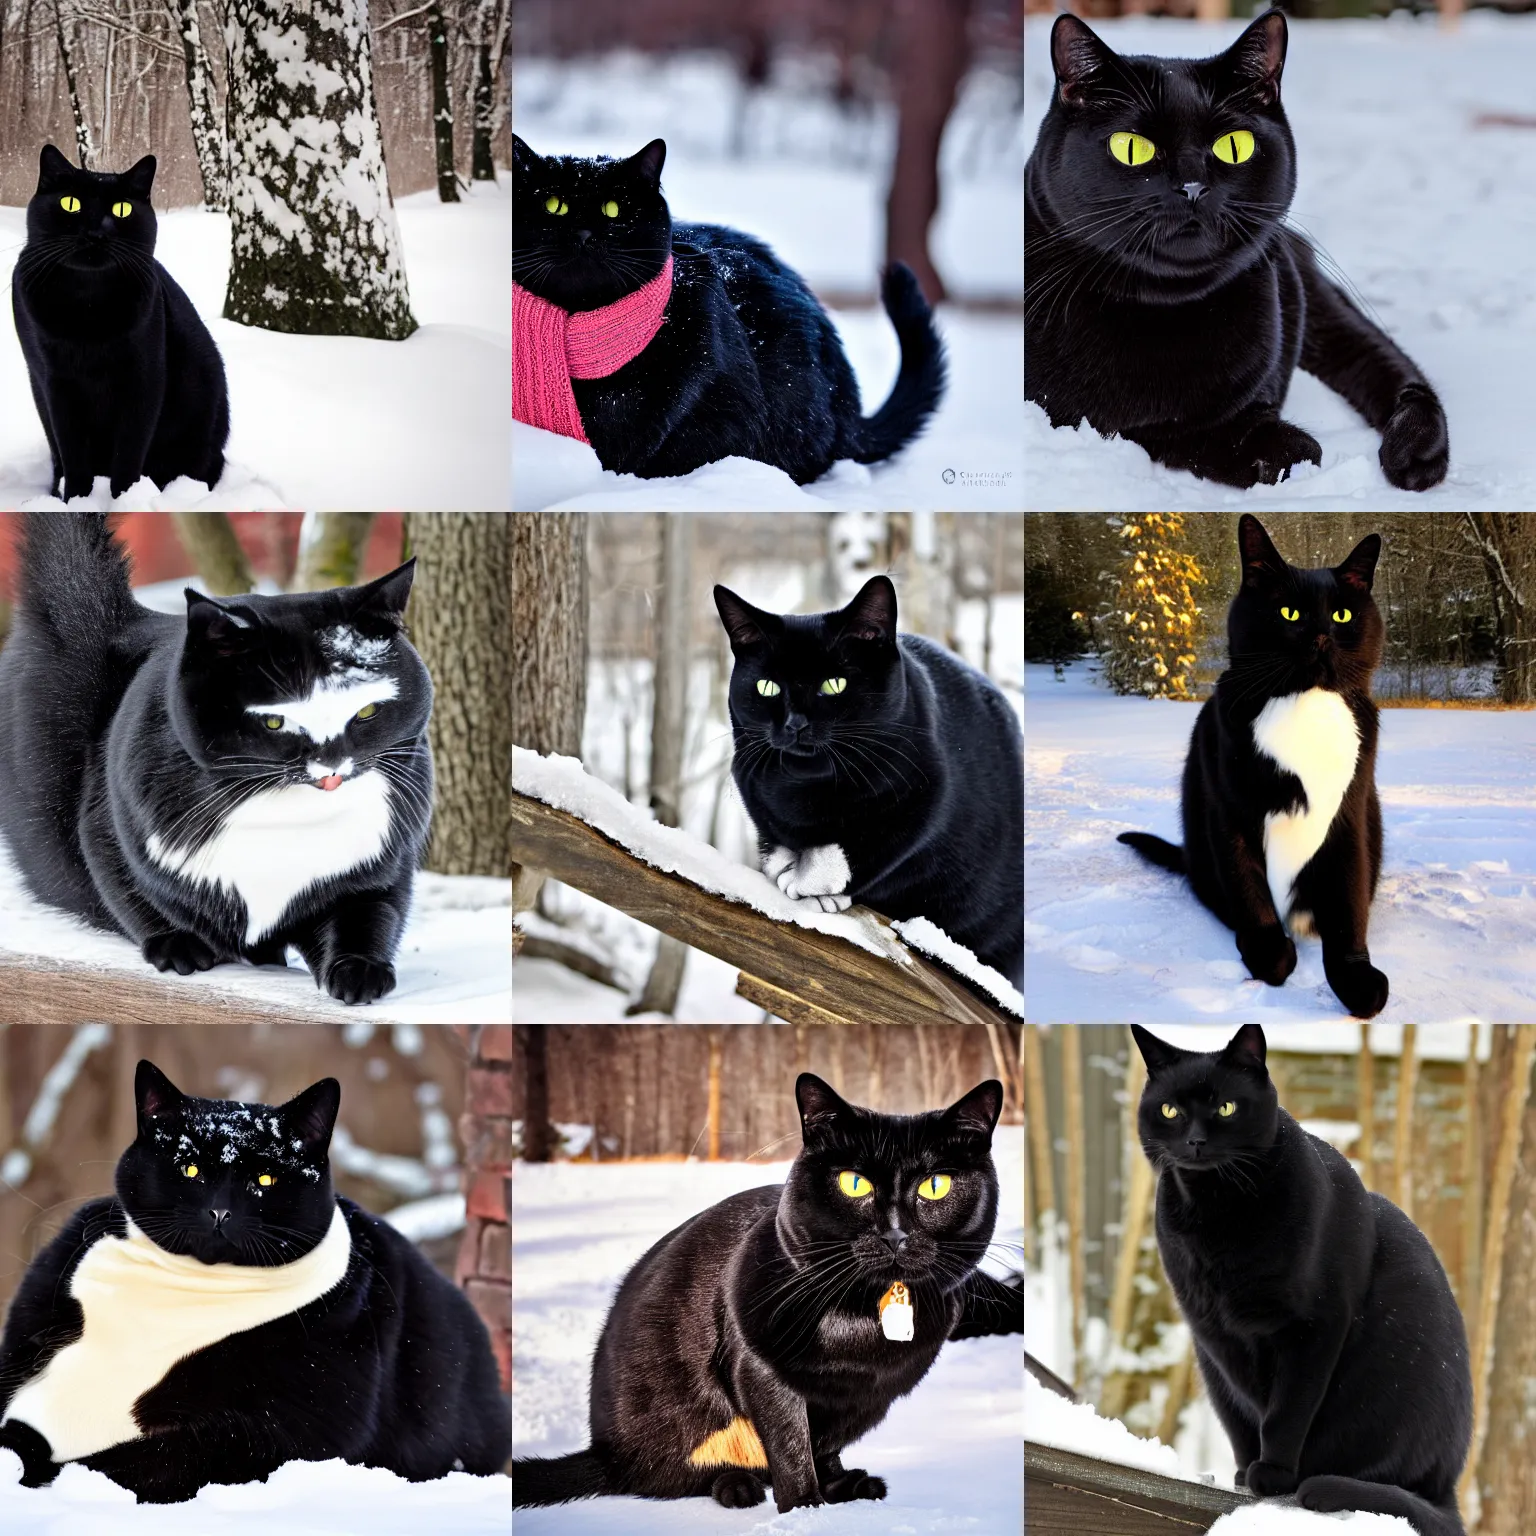 Prompt: fat black cat in Minnesota winter